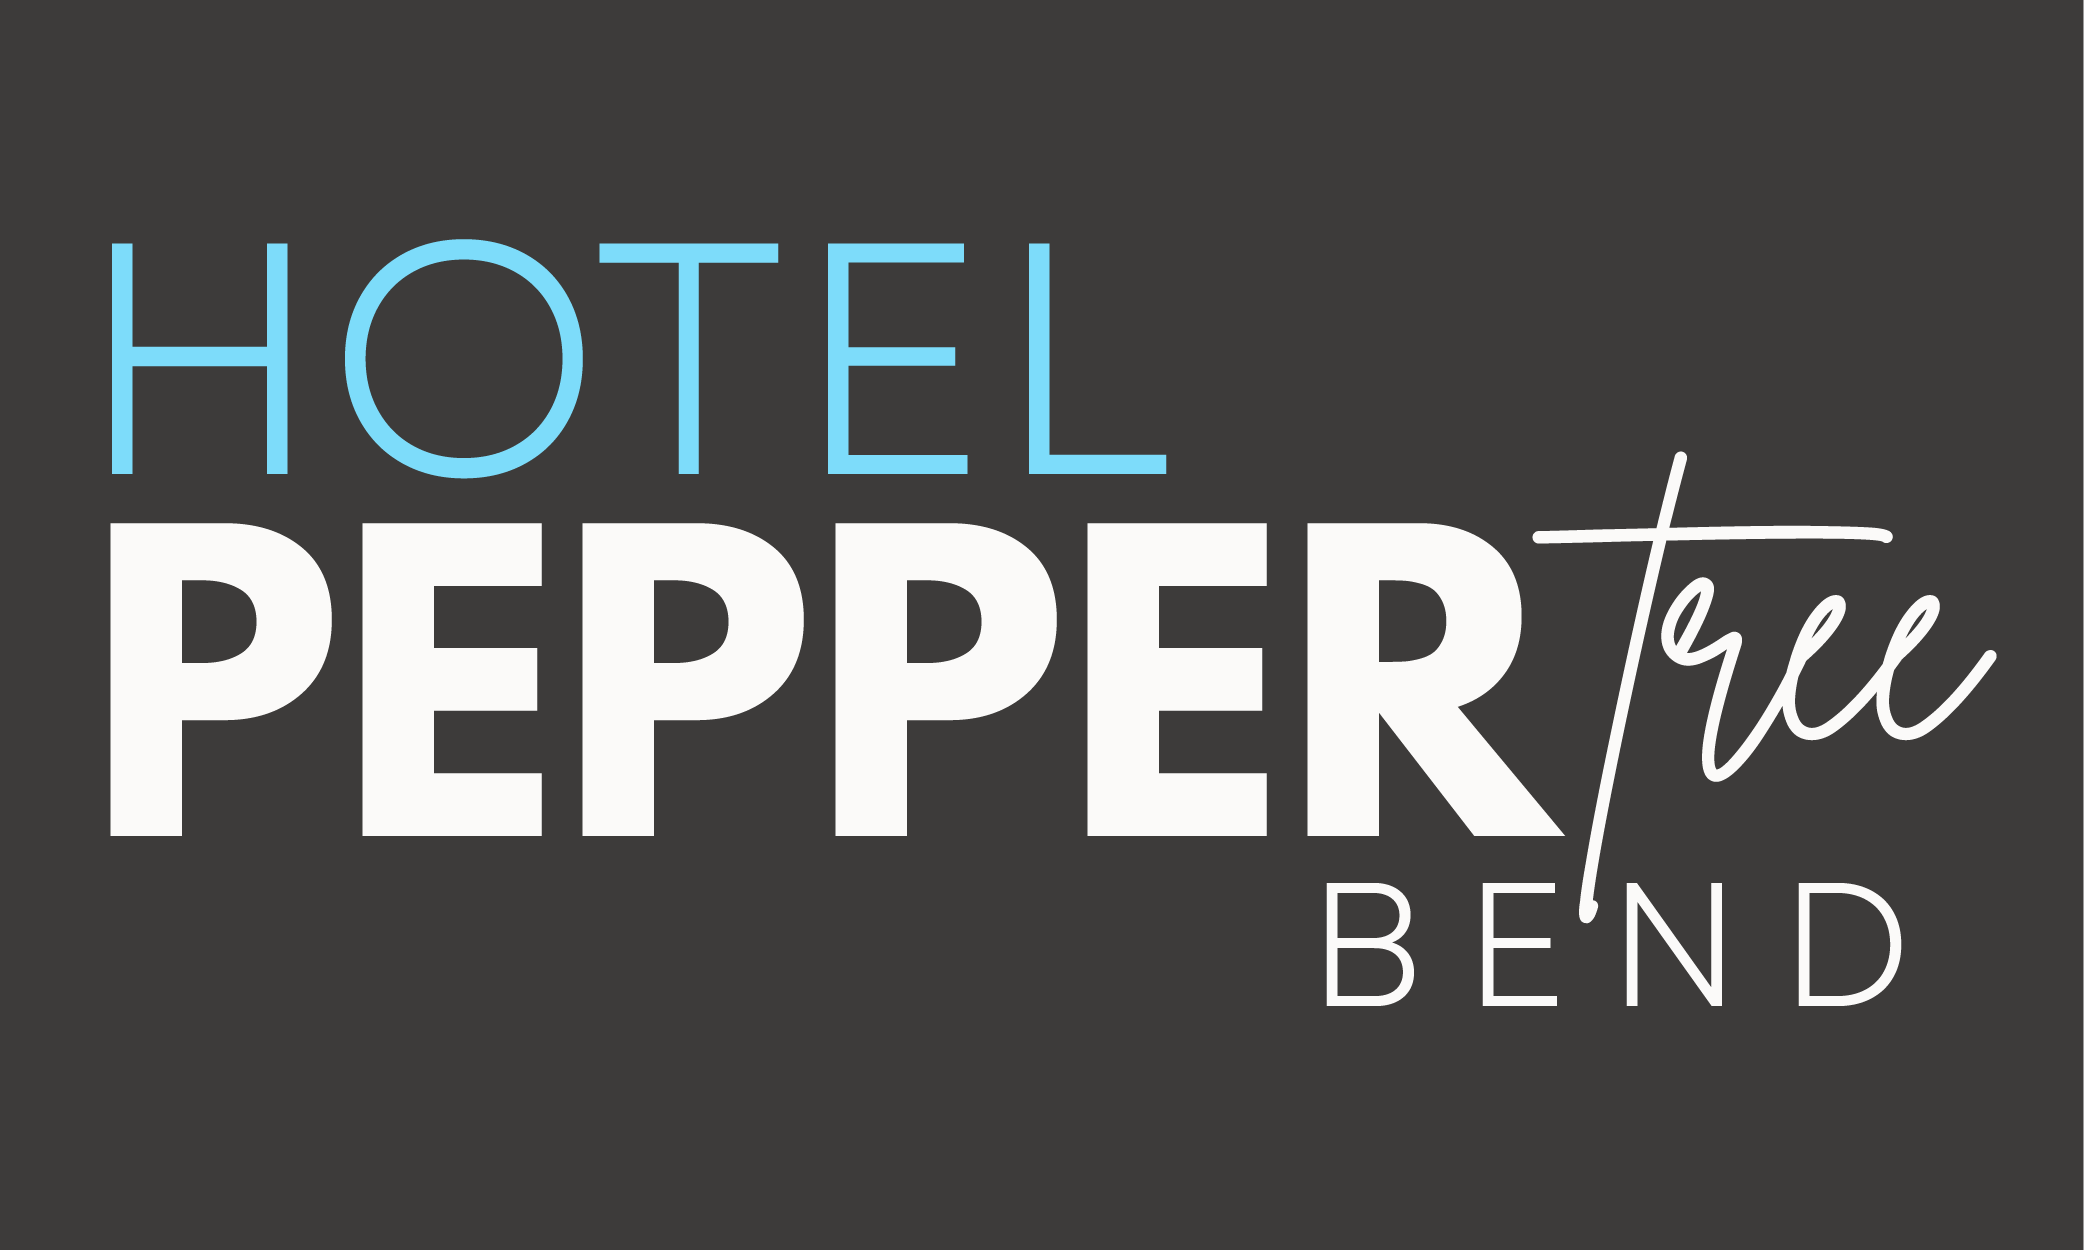 Hotel Pepper Tree